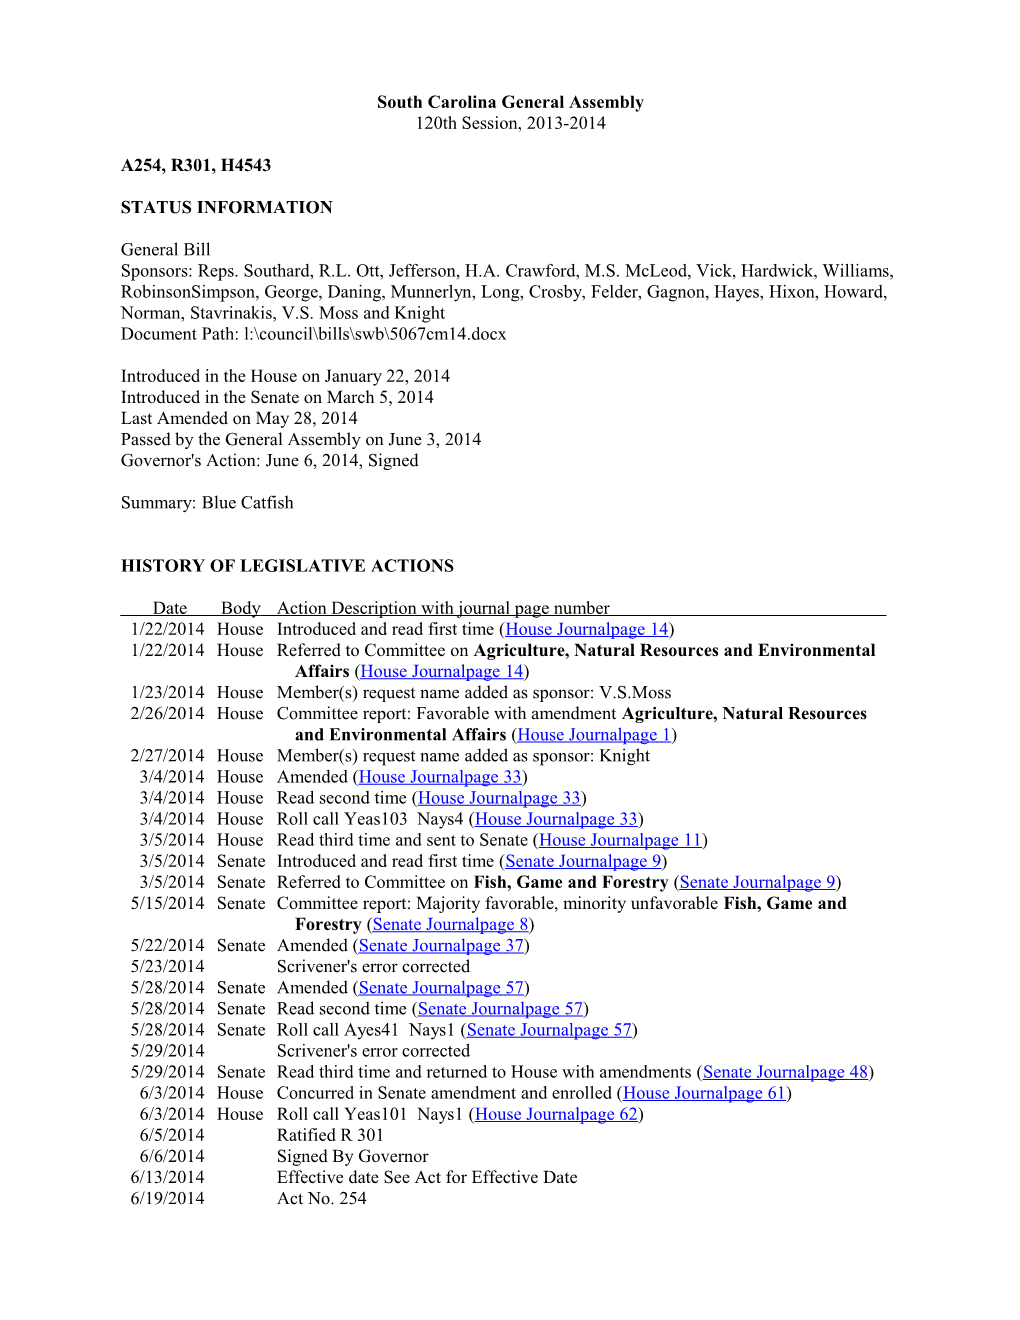 2013-2014 Bill 4543: Blue Catfish - South Carolina Legislature Online